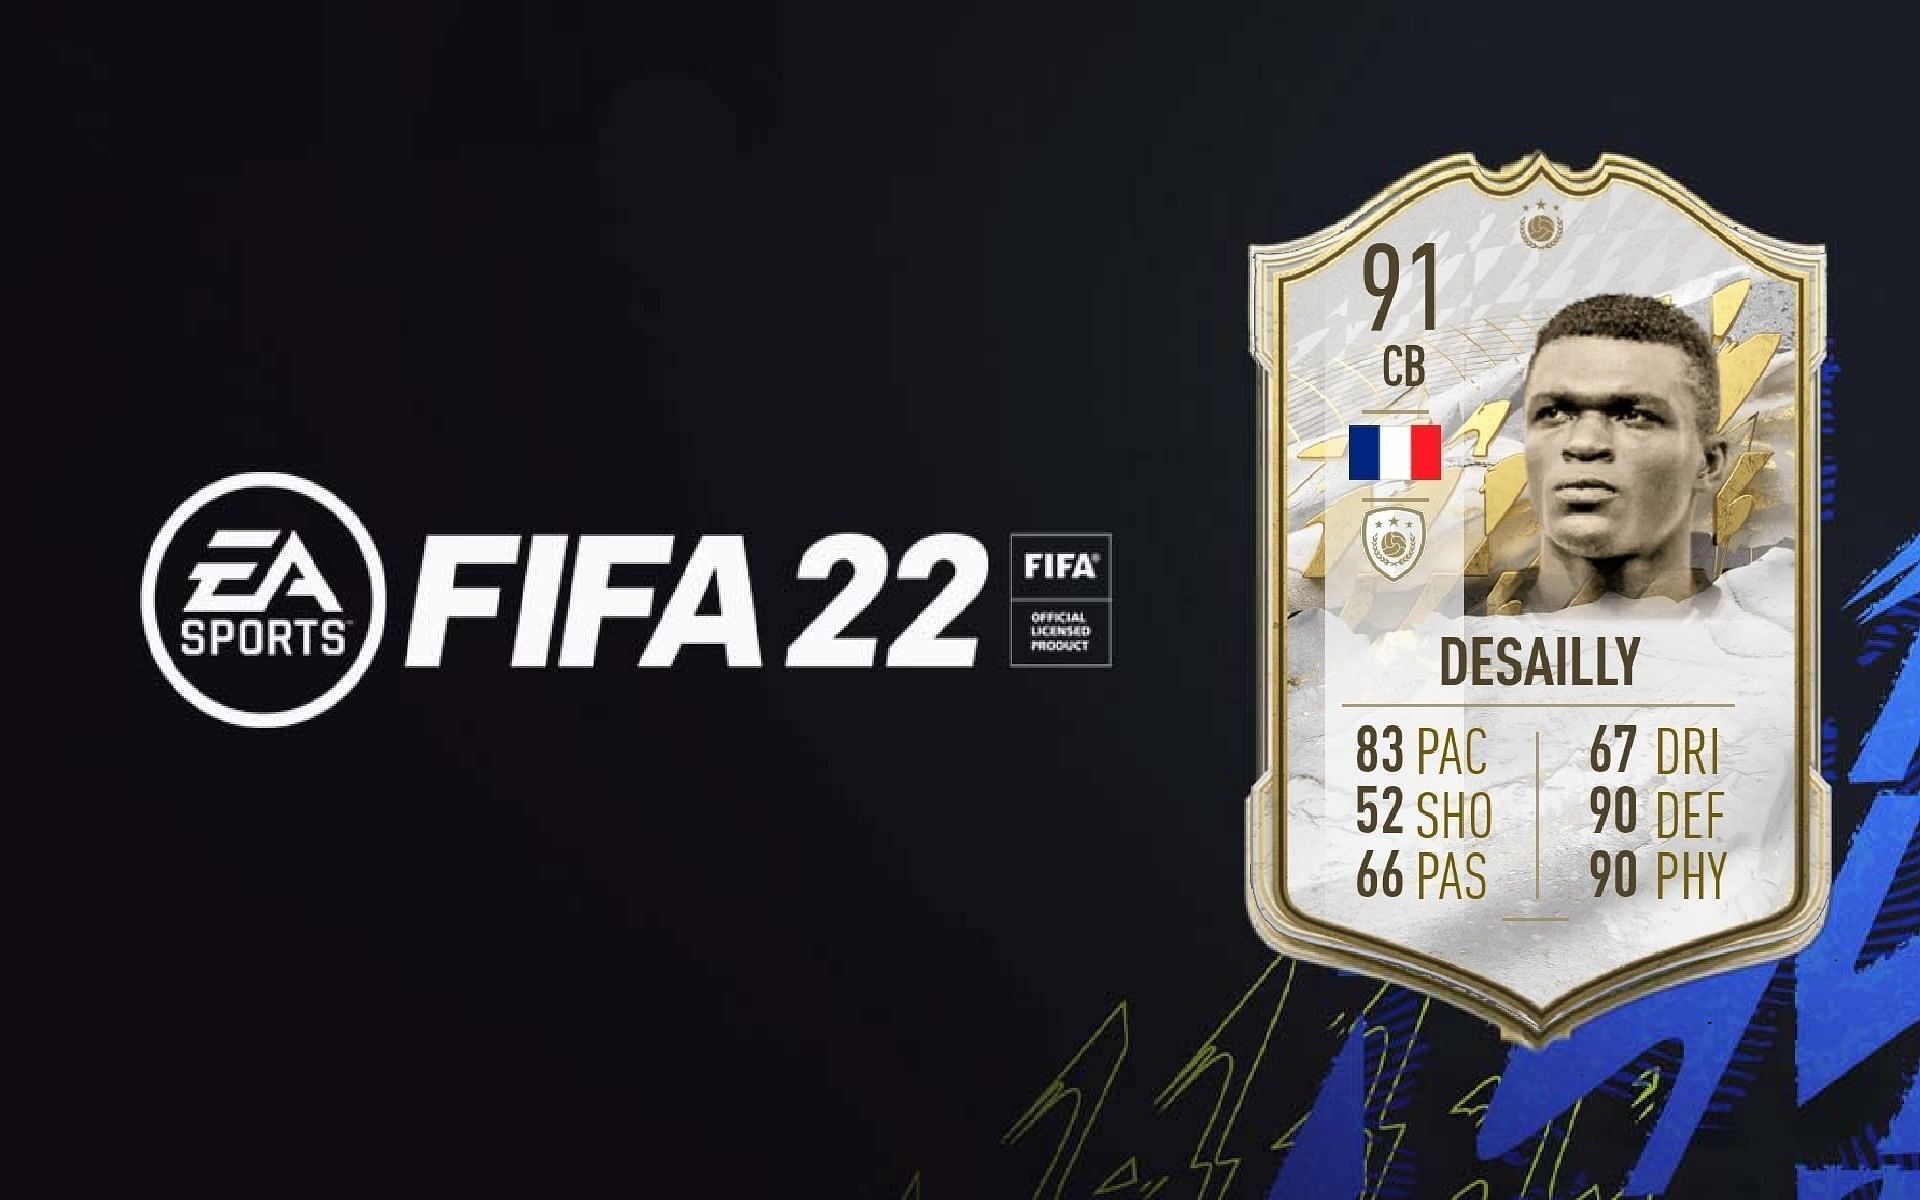 Marcel Desailly Prime Icon card in FIFA Ultimate Team (Image via Sportskeeda)